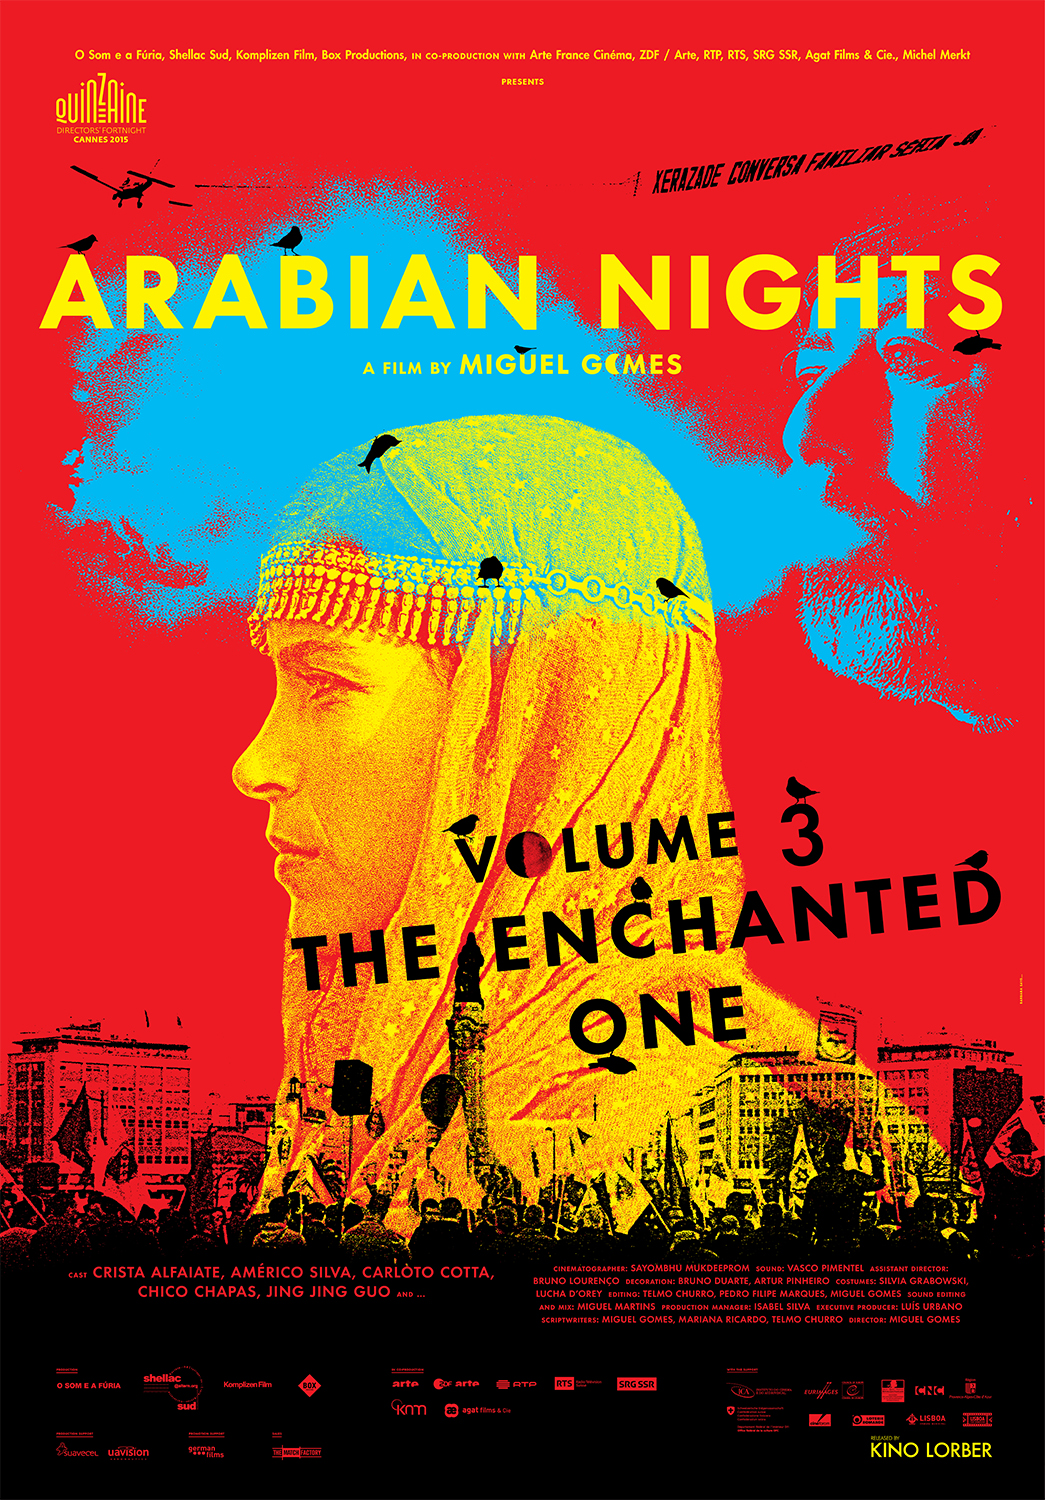 ARABIAN NIGHTS: VOLUME 3 THE ENCHANTED ONE